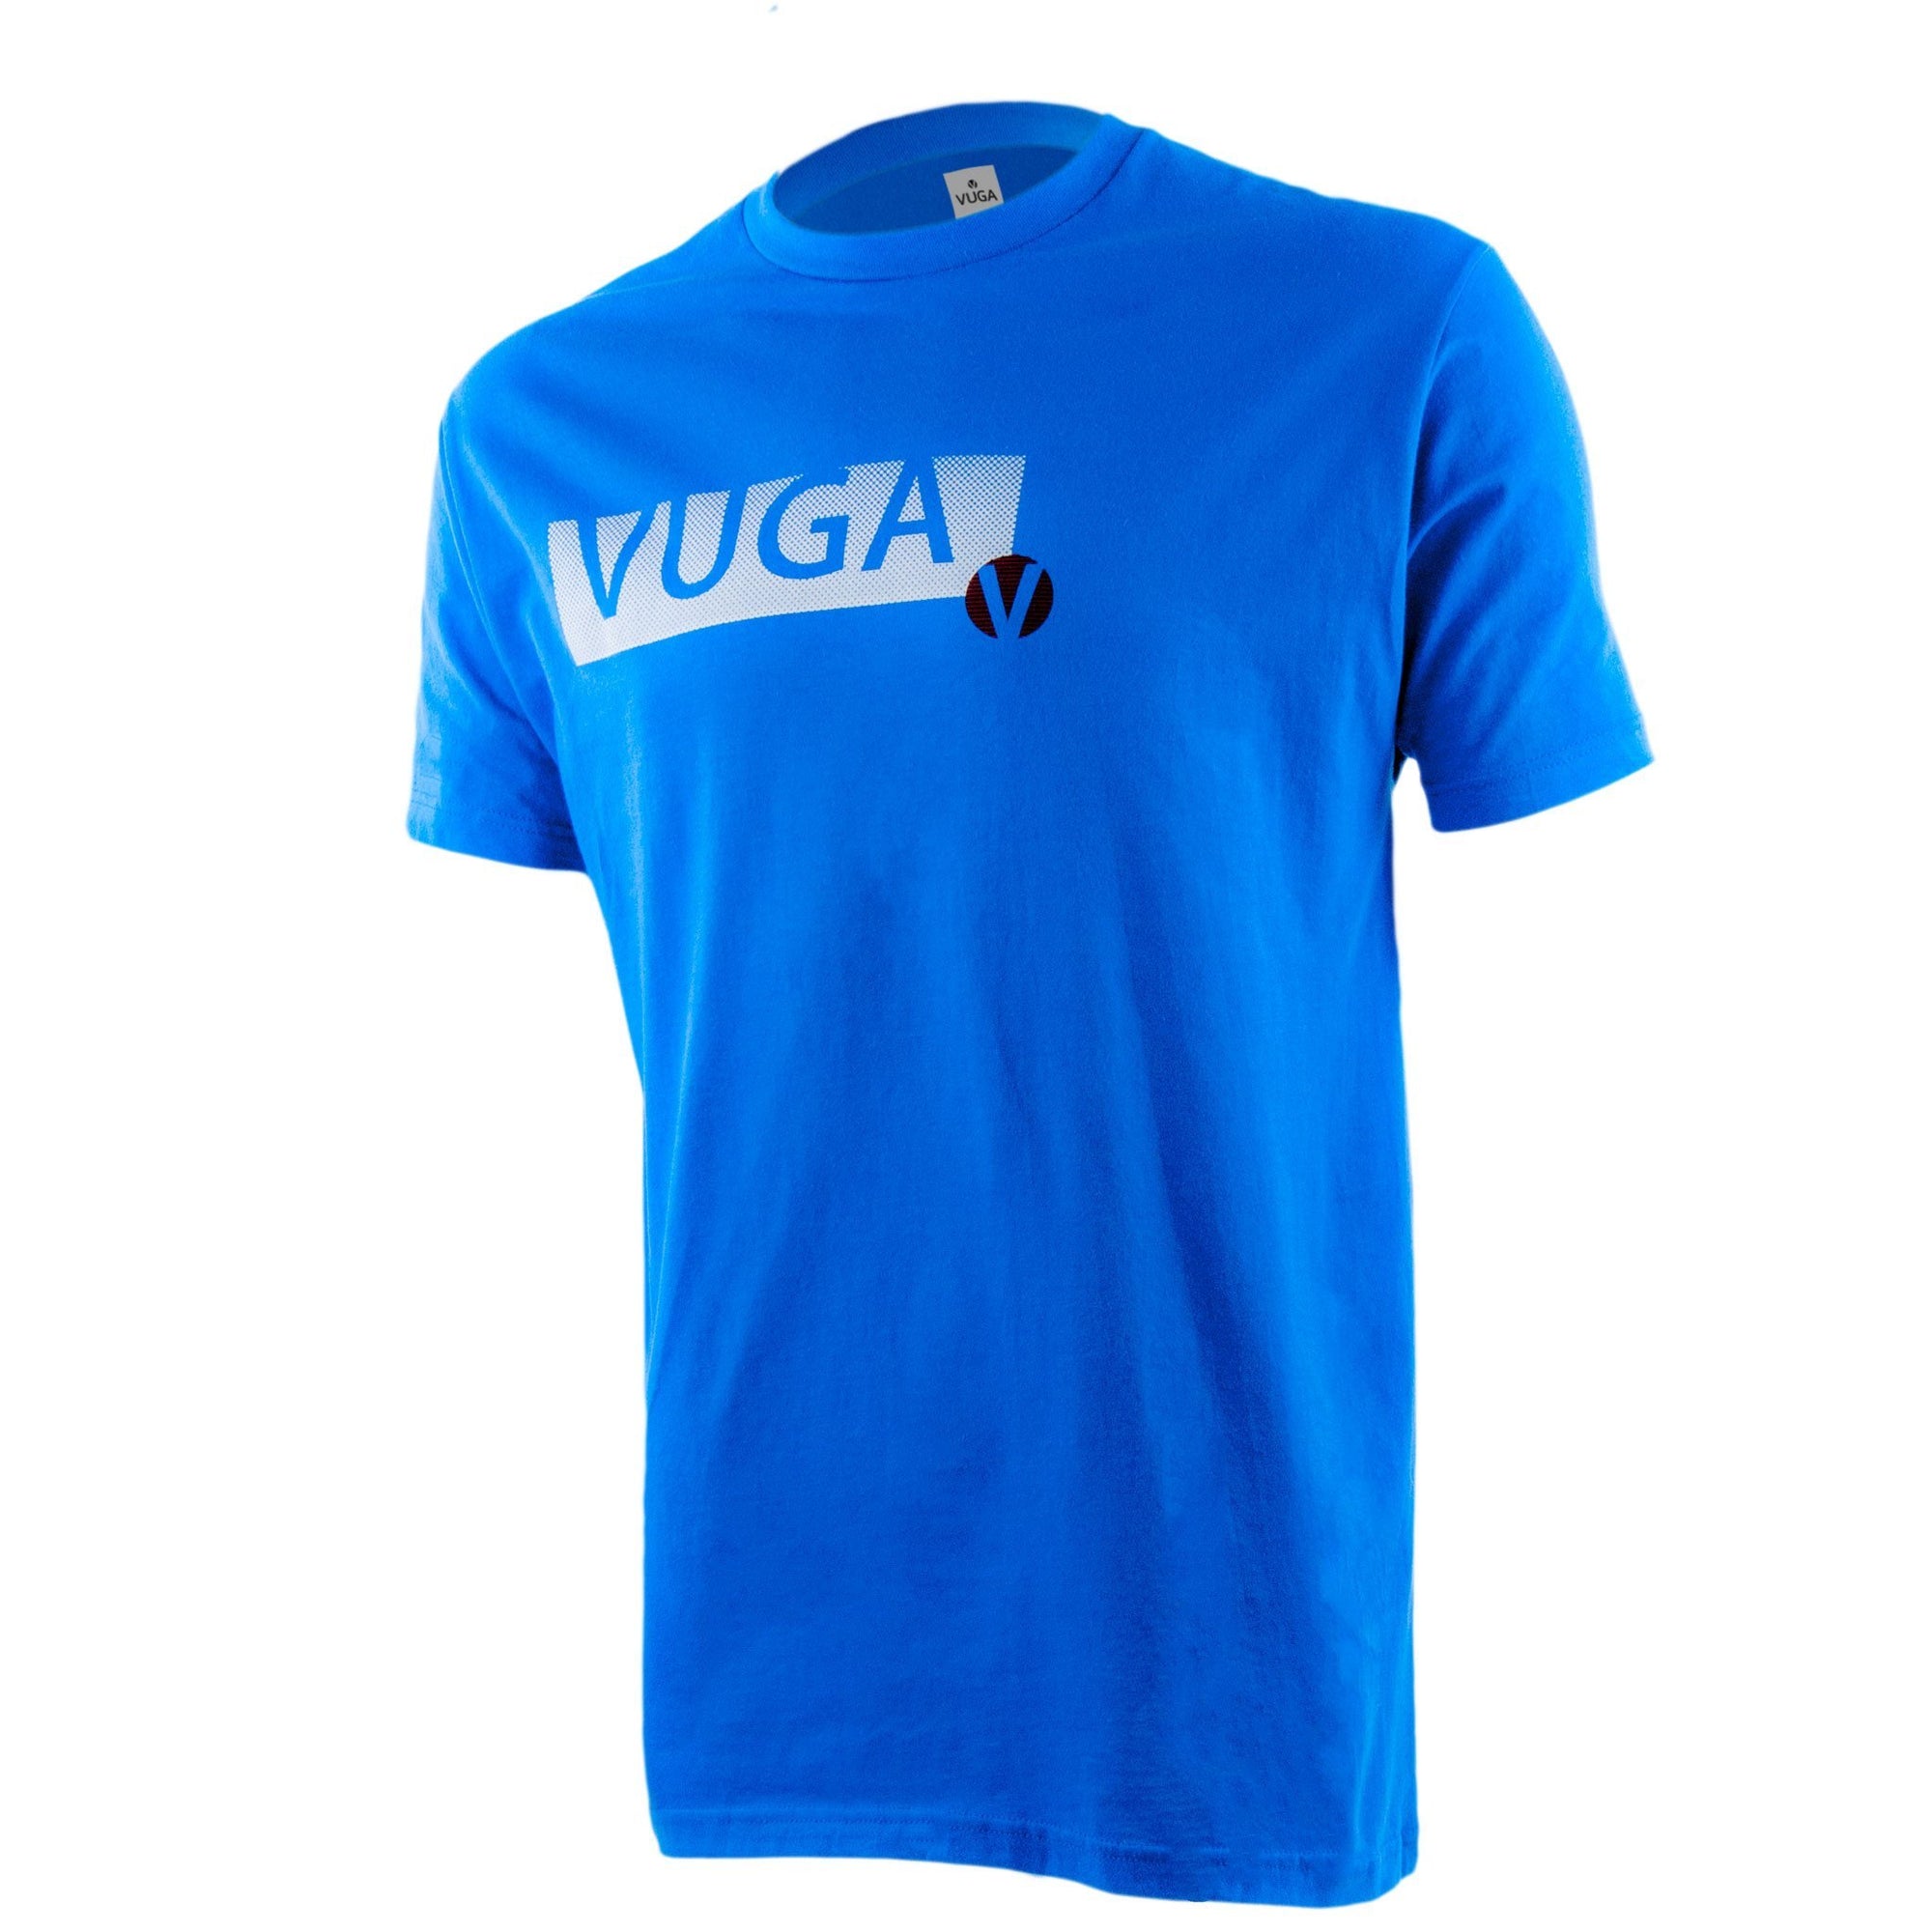 VUGA - Horizontal Logo Tee - Royal Blue